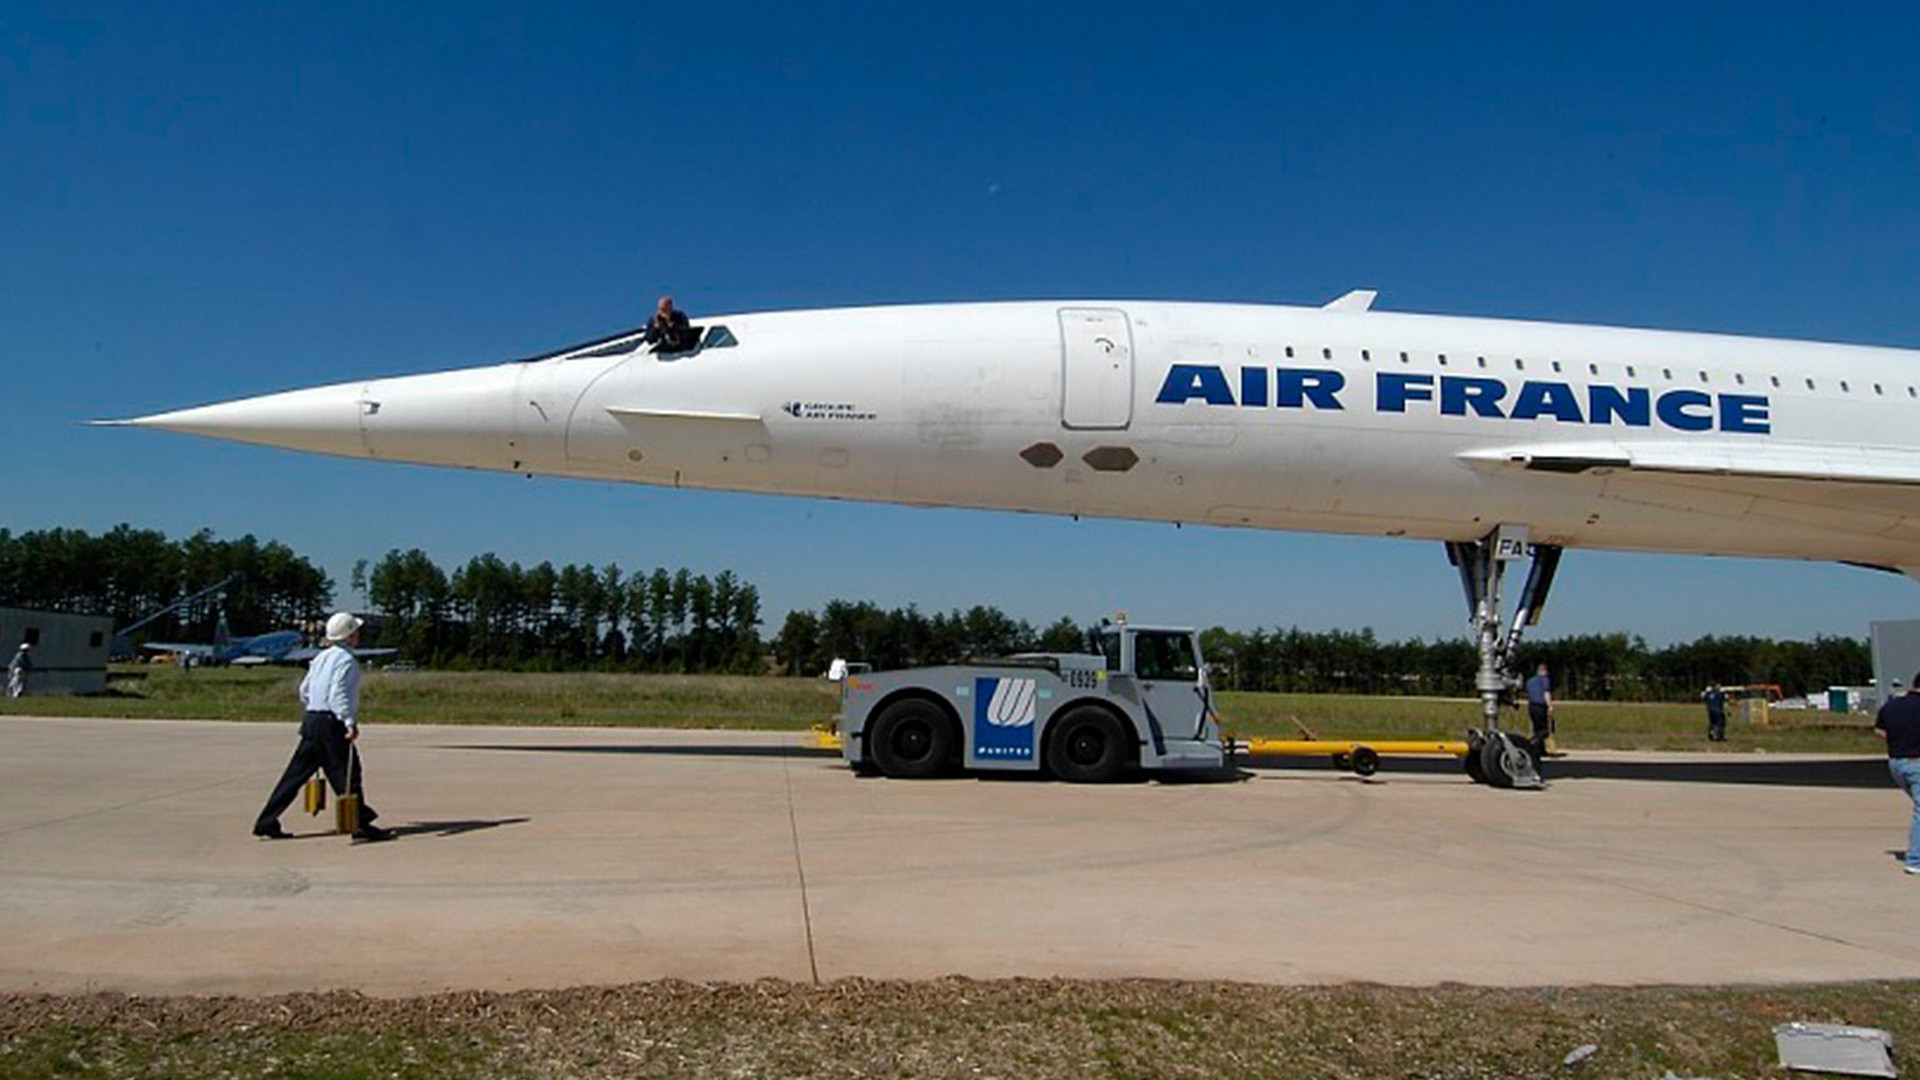 The Concorde: Revolutionizing Air Travel